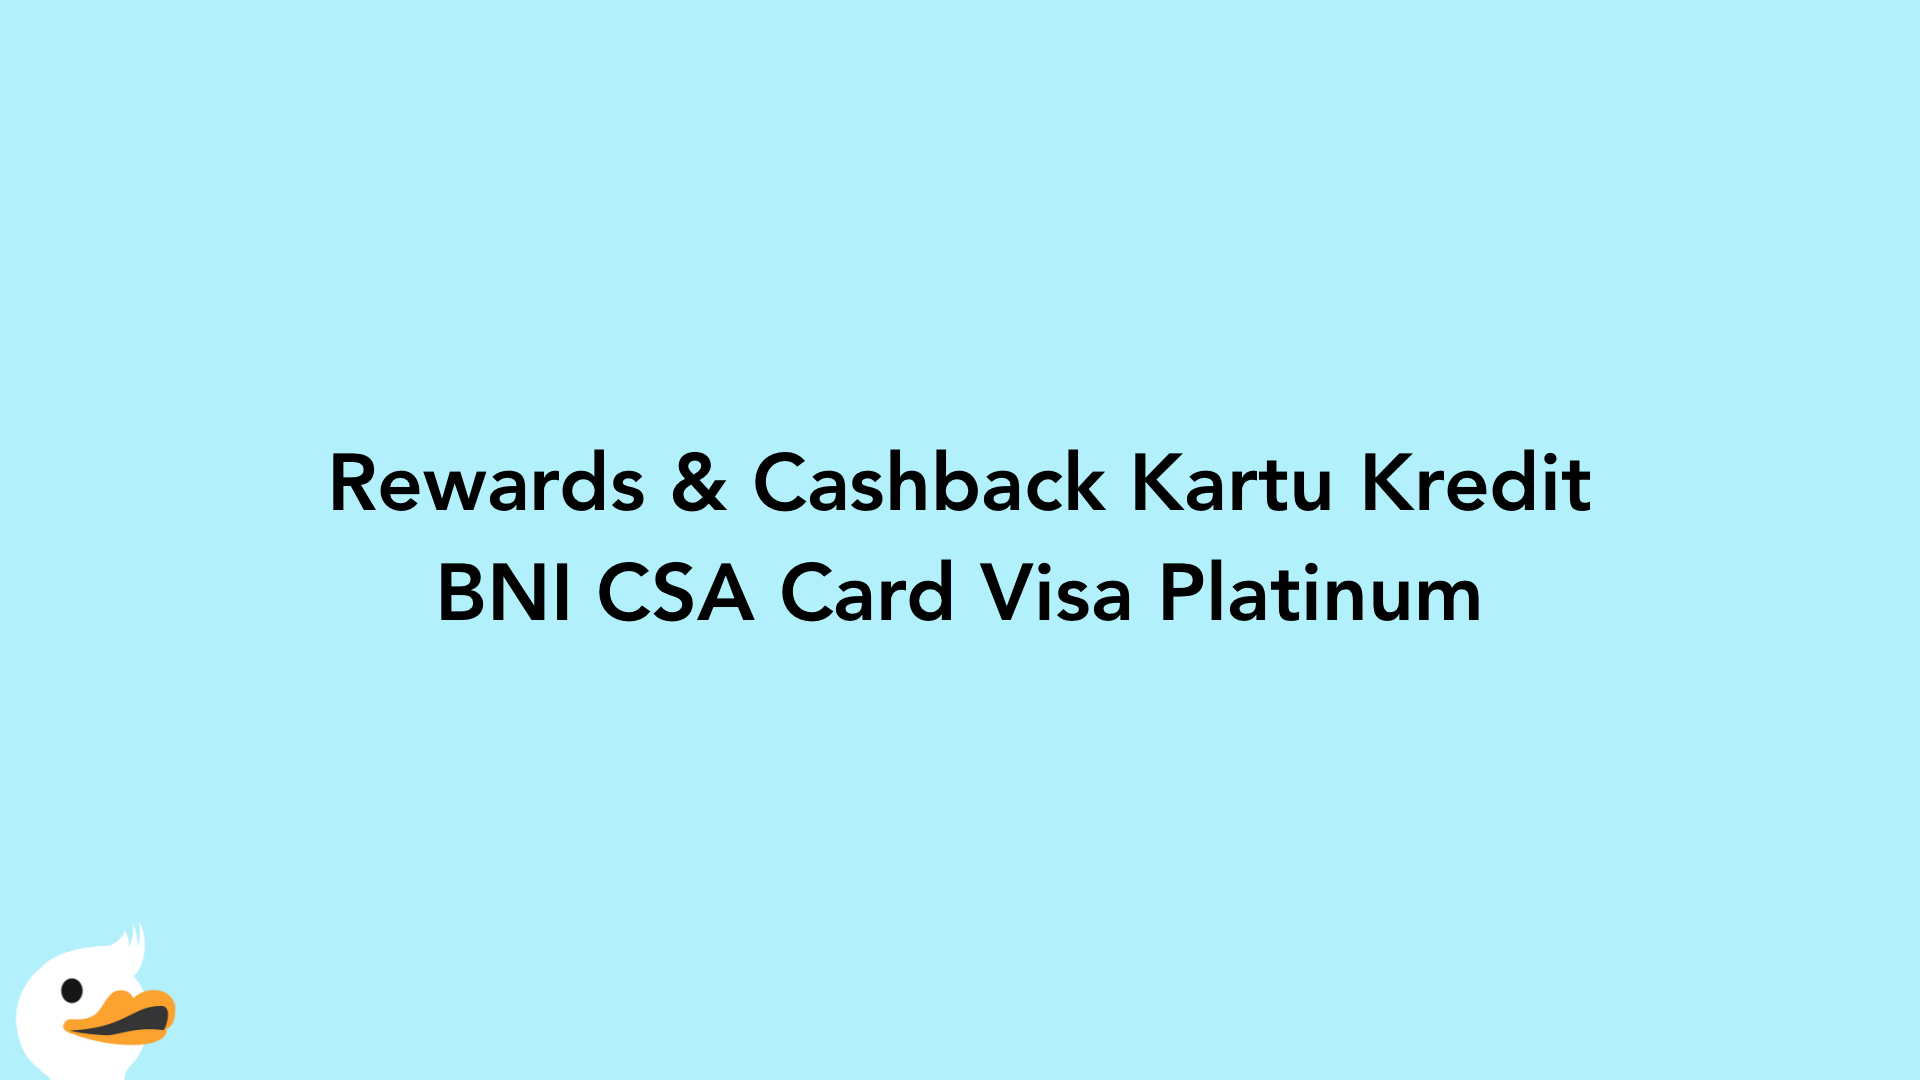 Rewards & Cashback Kartu Kredit BNI CSA Card Visa Platinum